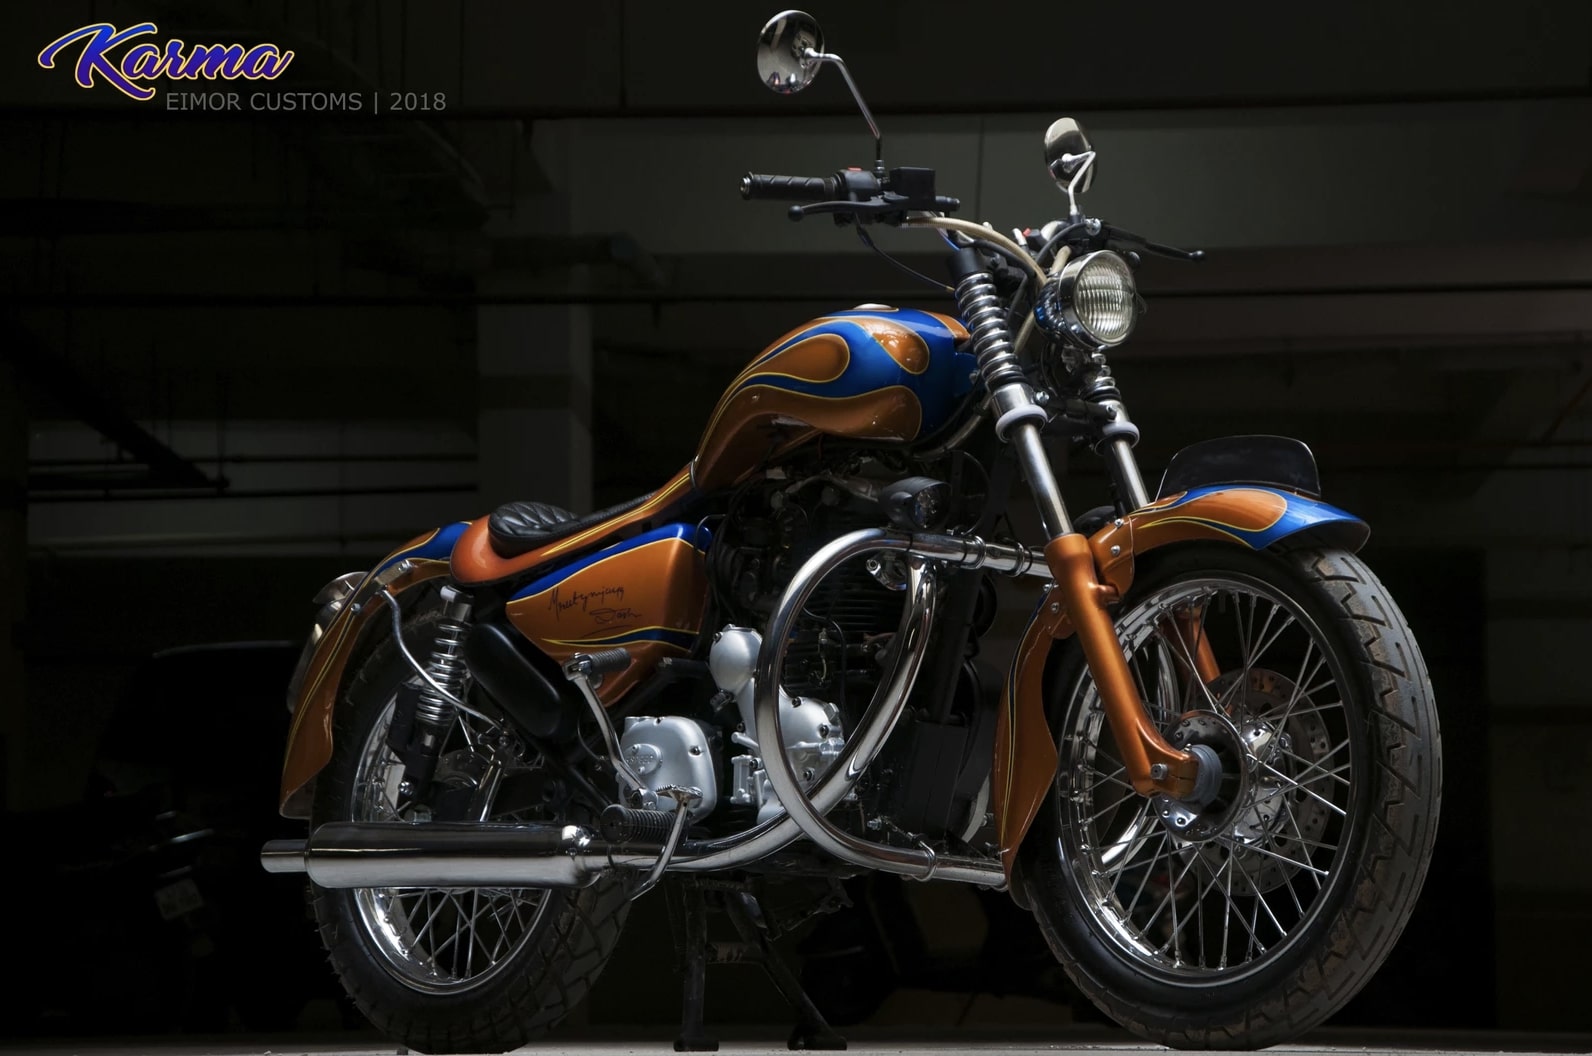 Meet Karma 350 - Based on the Royal Enfield Thunderbird Motorcycle - angle